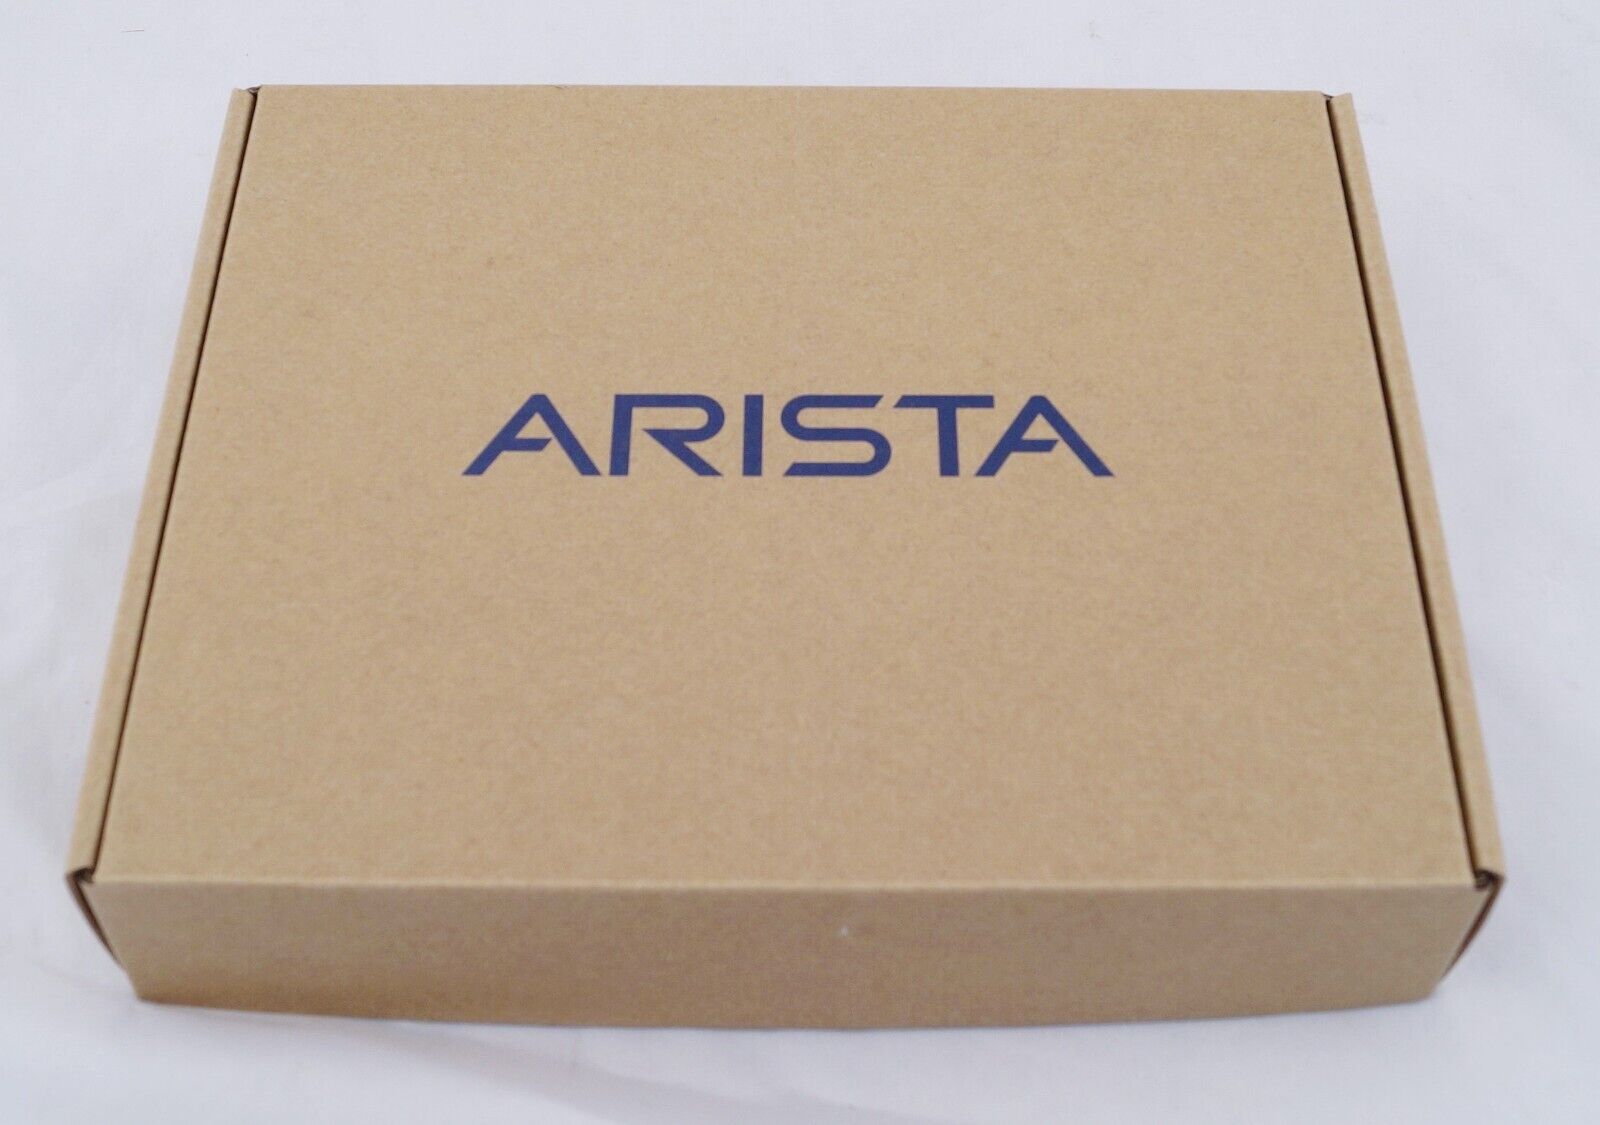 Arista C75 3x3:3 dual radio 802.11ac access point with internal antennas